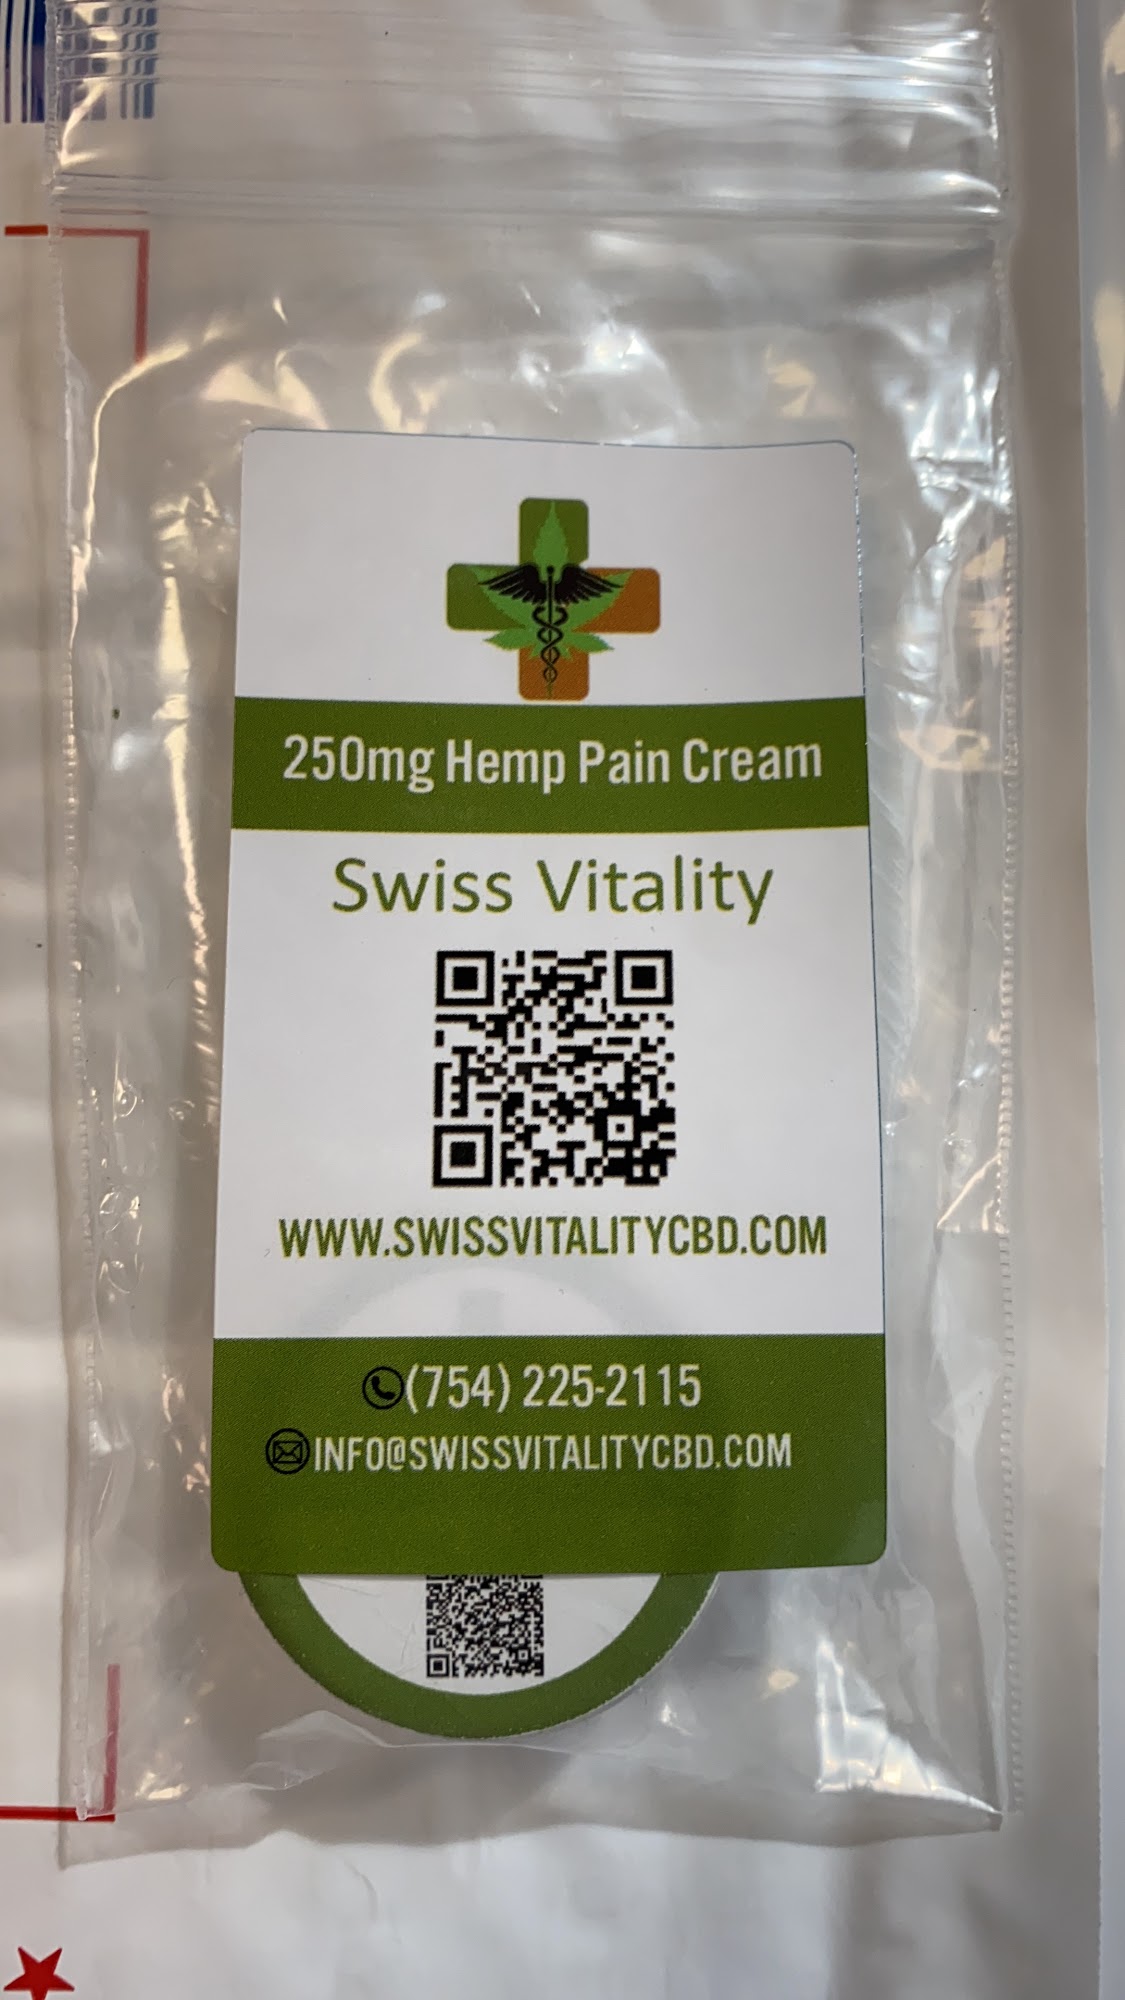 Swiss Vitality Inc